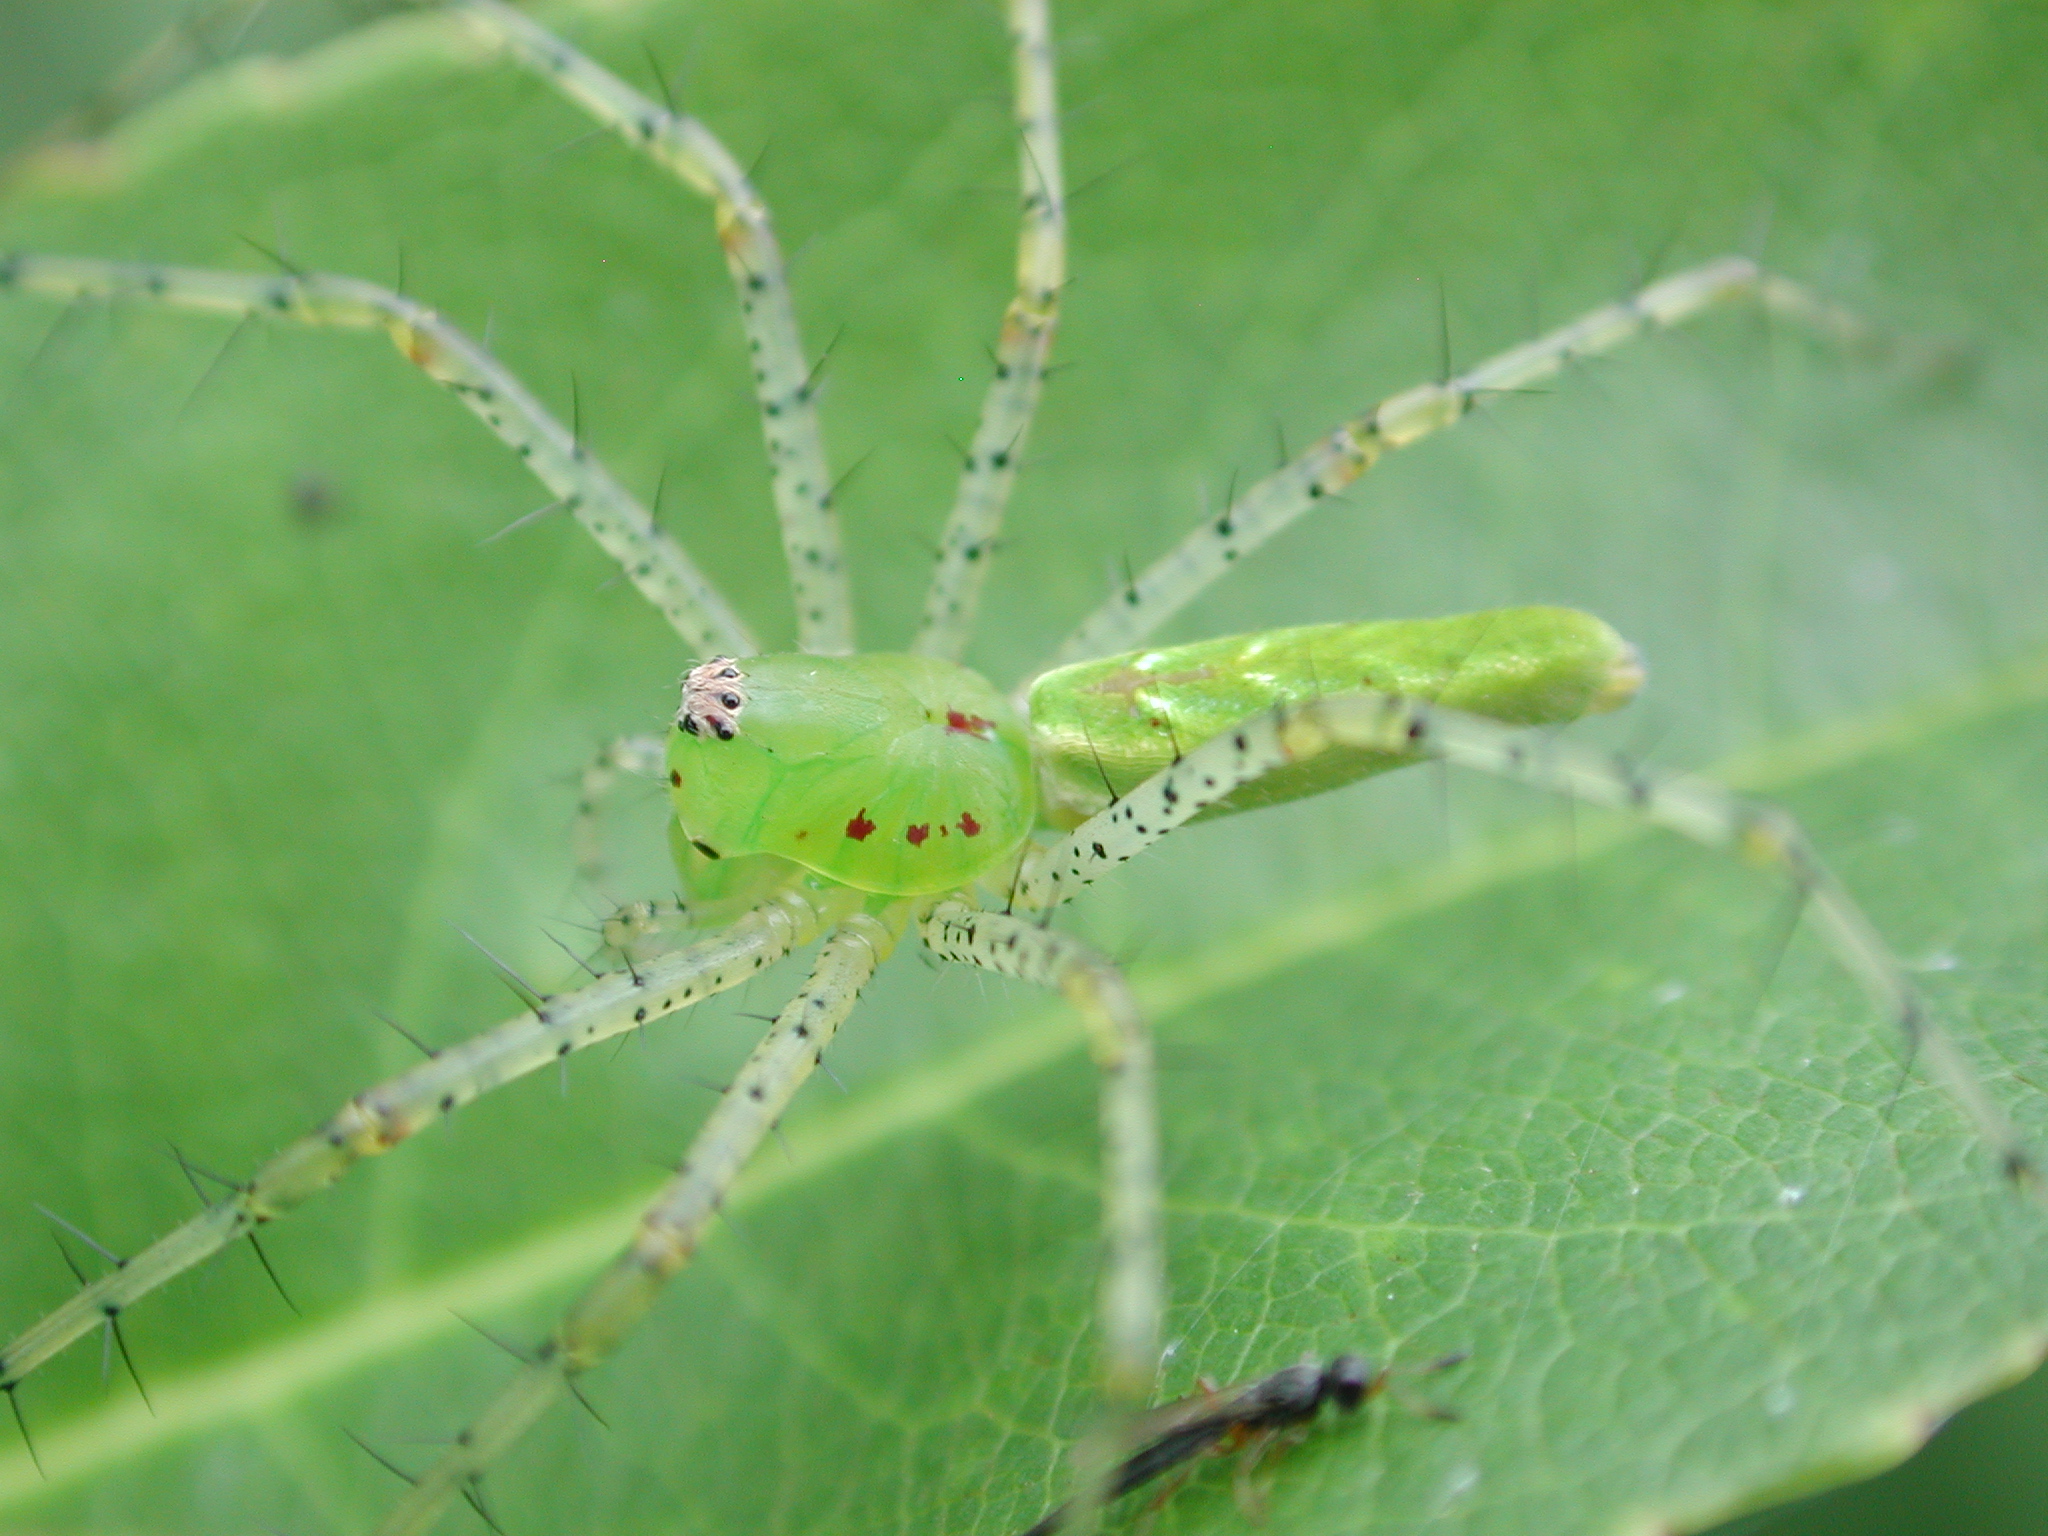 File:Green lynx spider.JPG - Wikimedia Commons